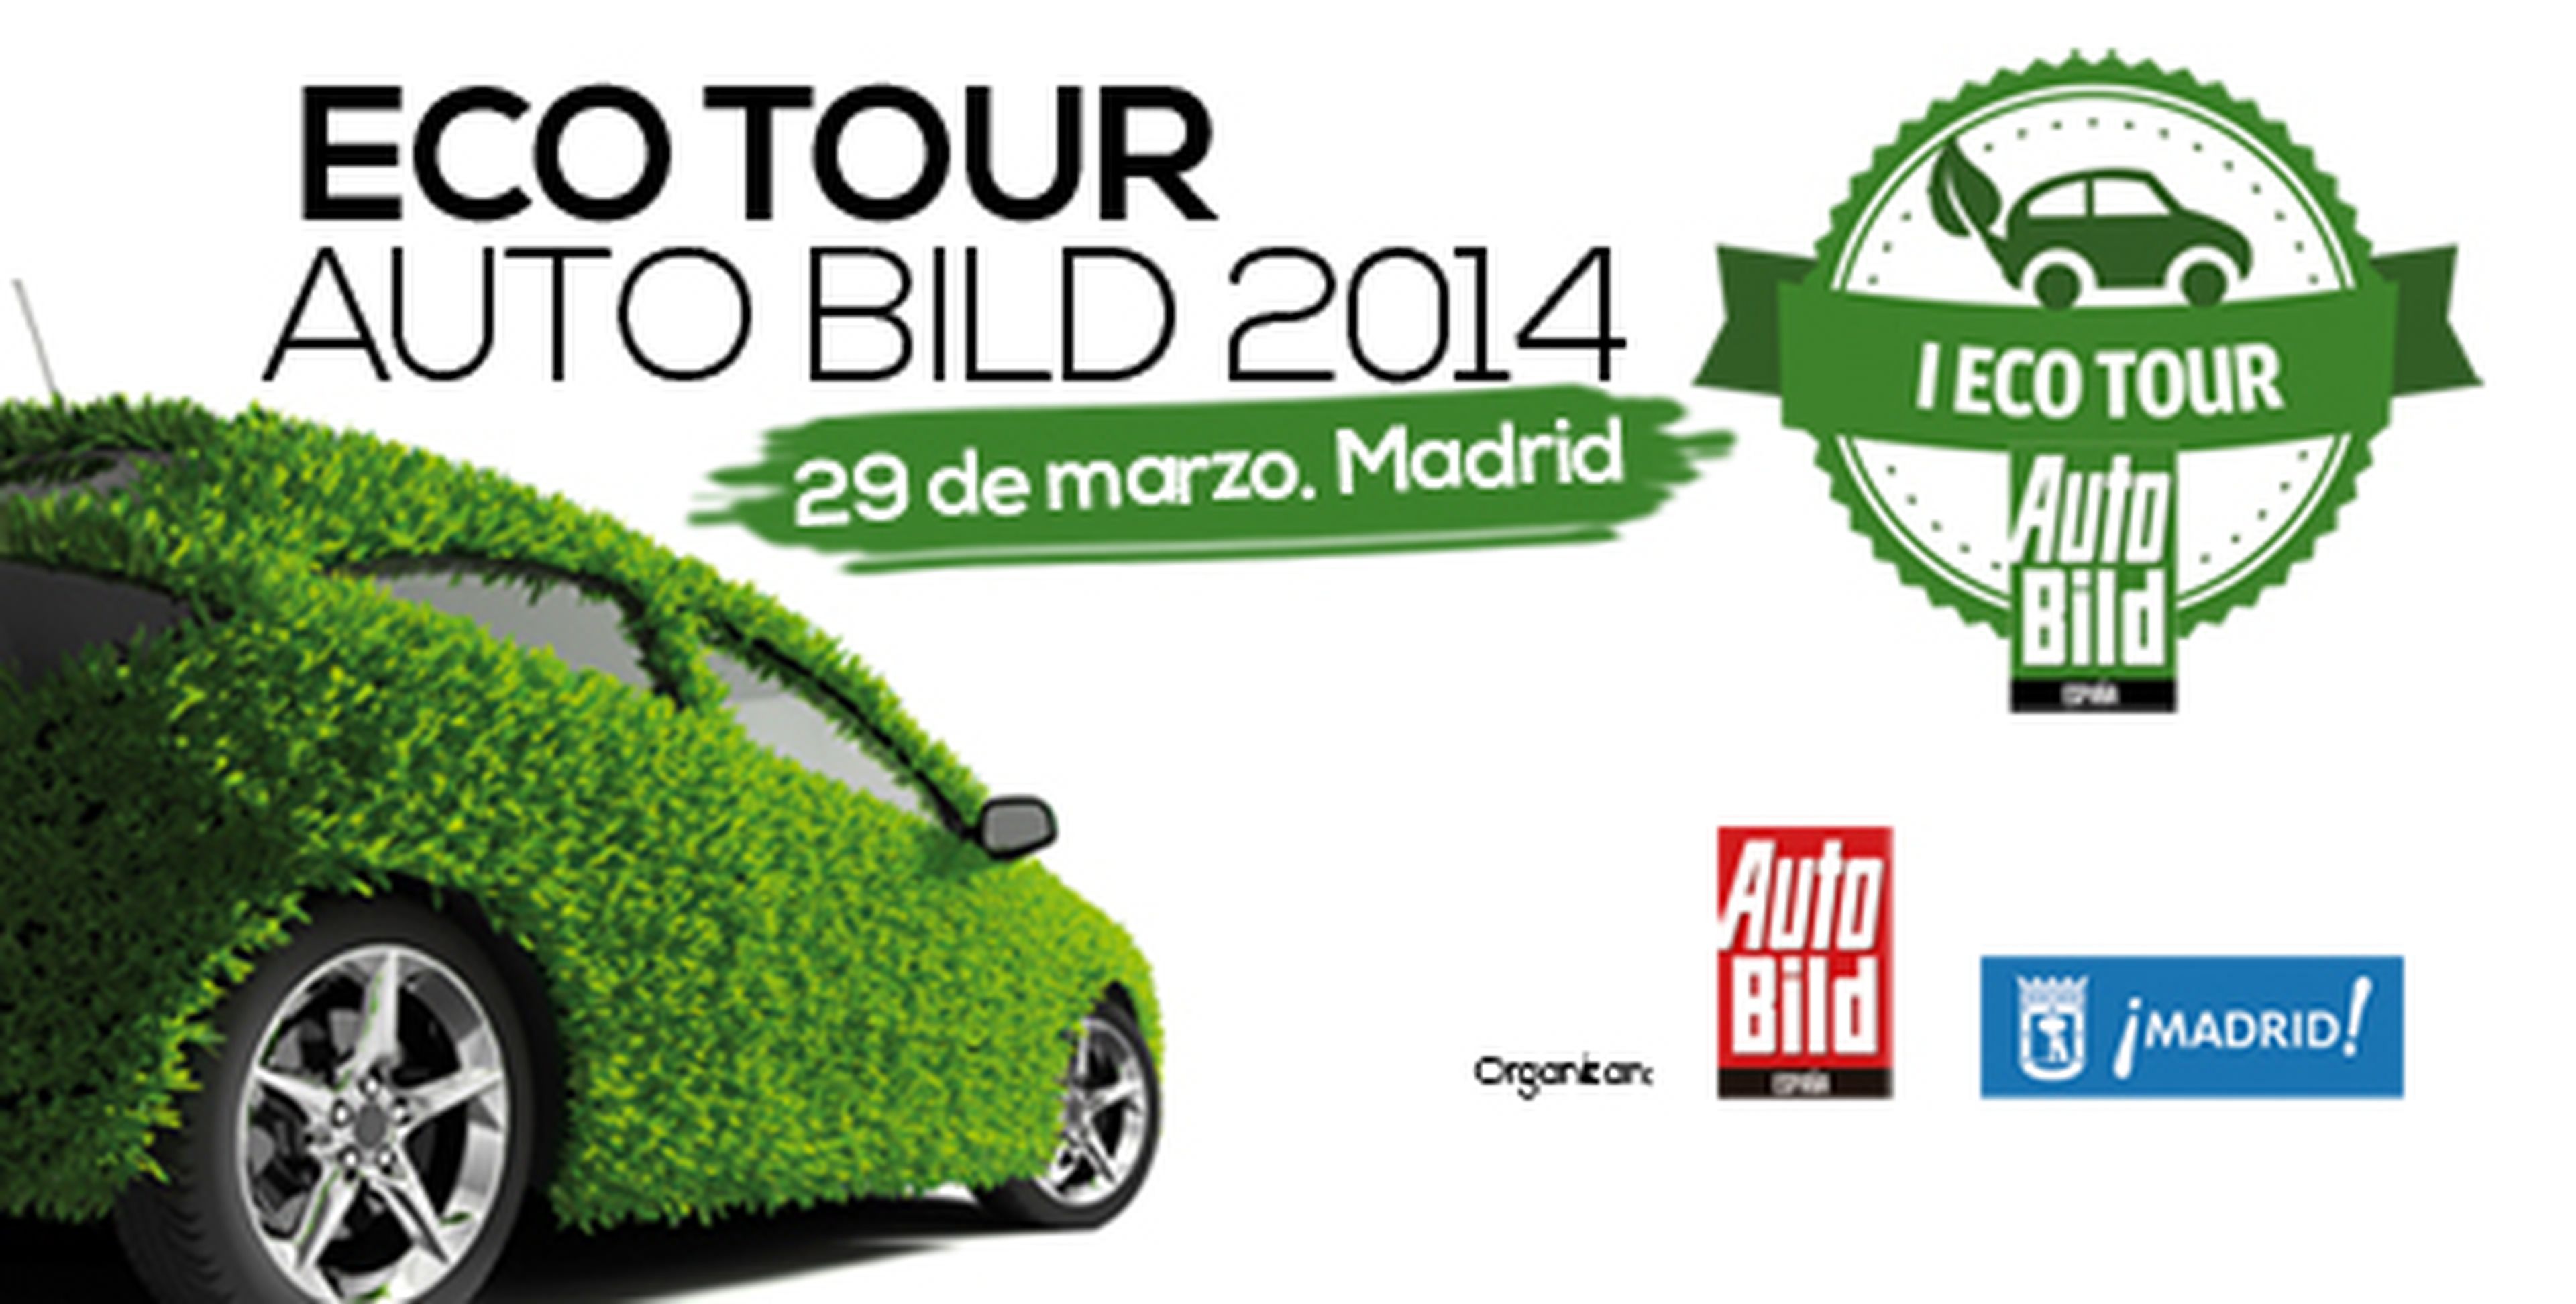 Eco Tour AUTO BILD 2014: apuesta al verde